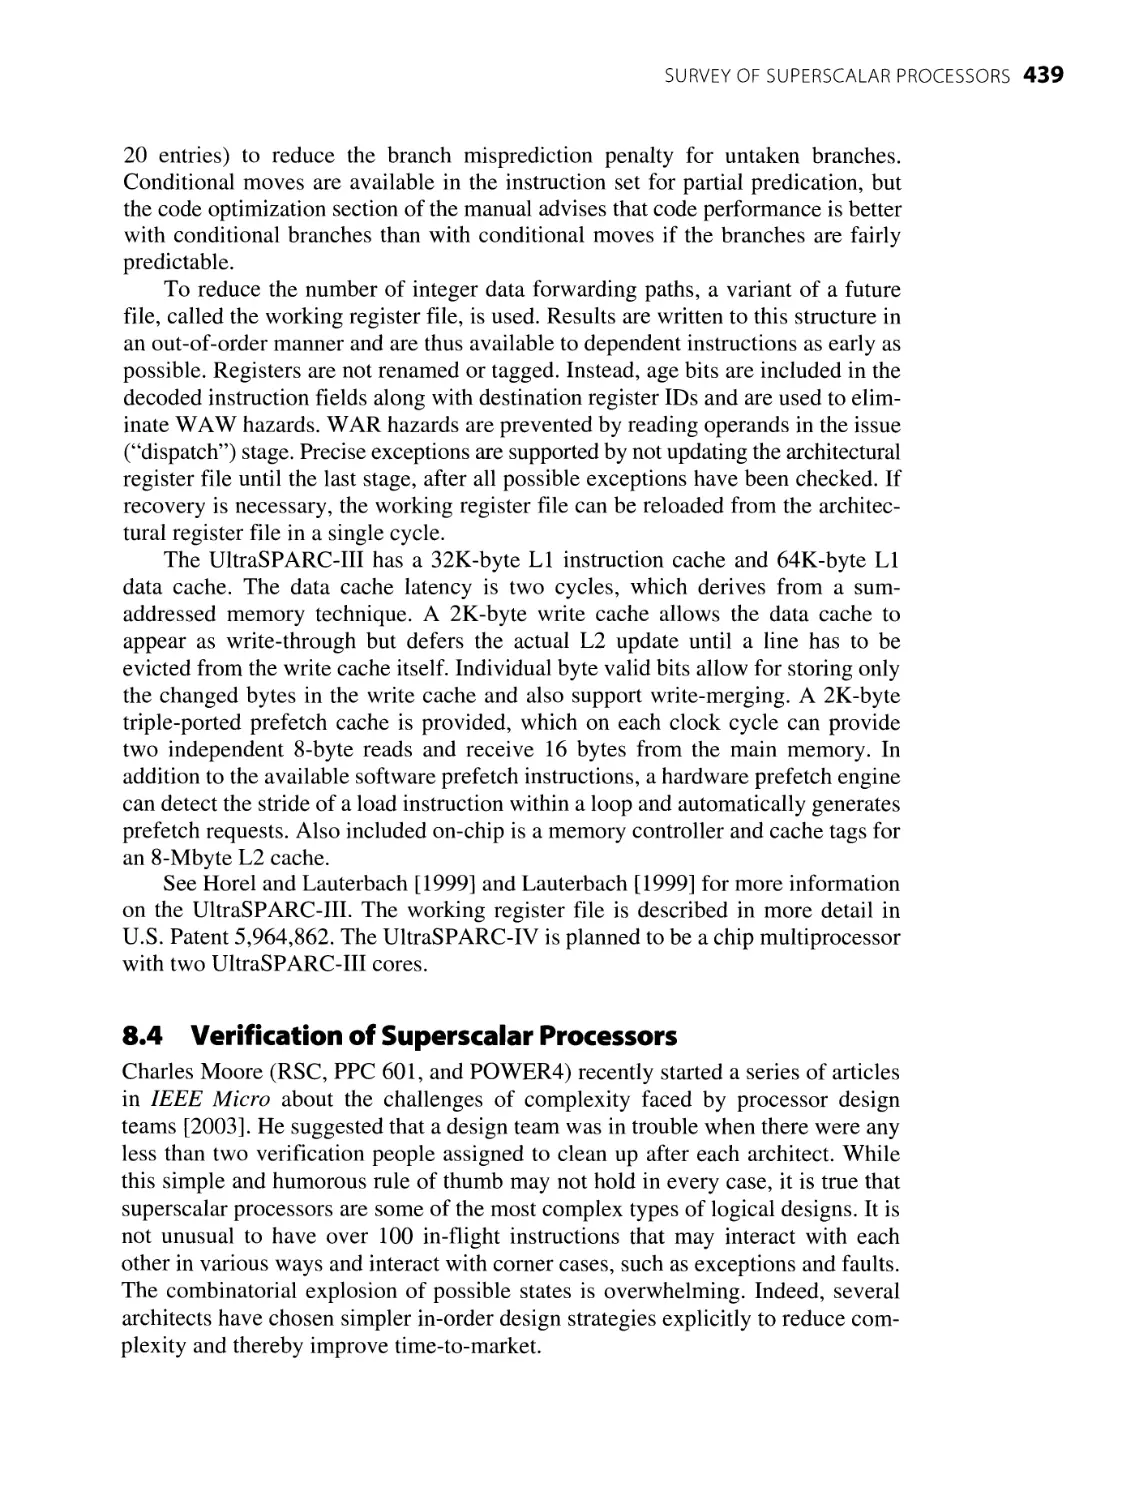 8.4 Verification of Superscalar Processors